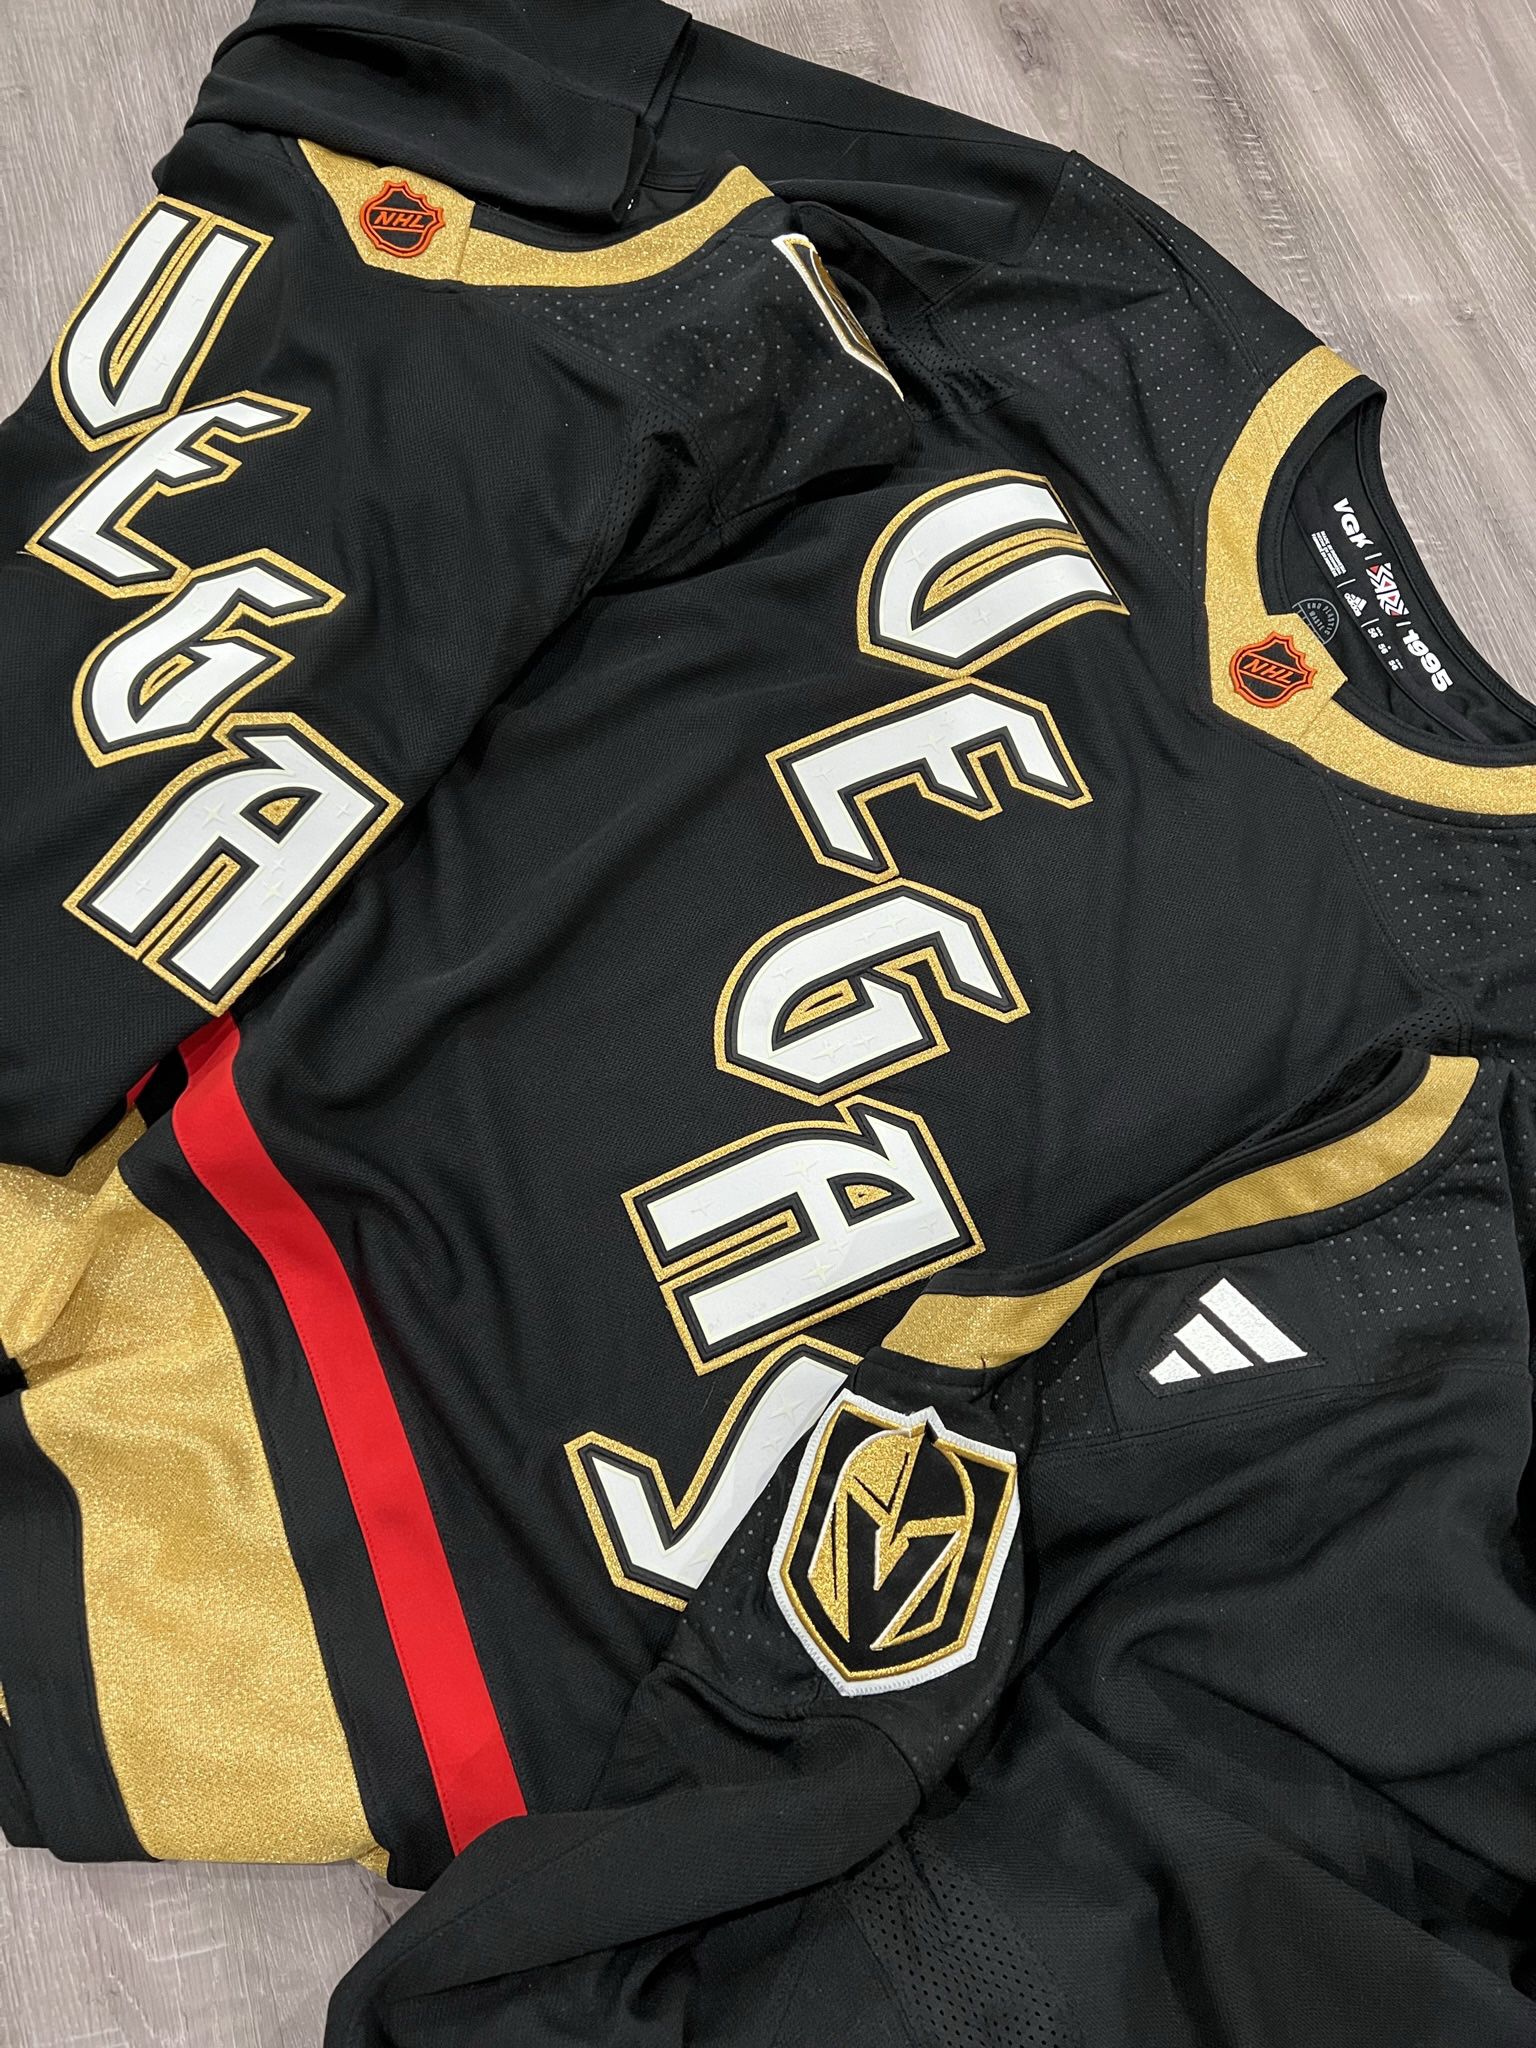 VGK release new gold jerseys 